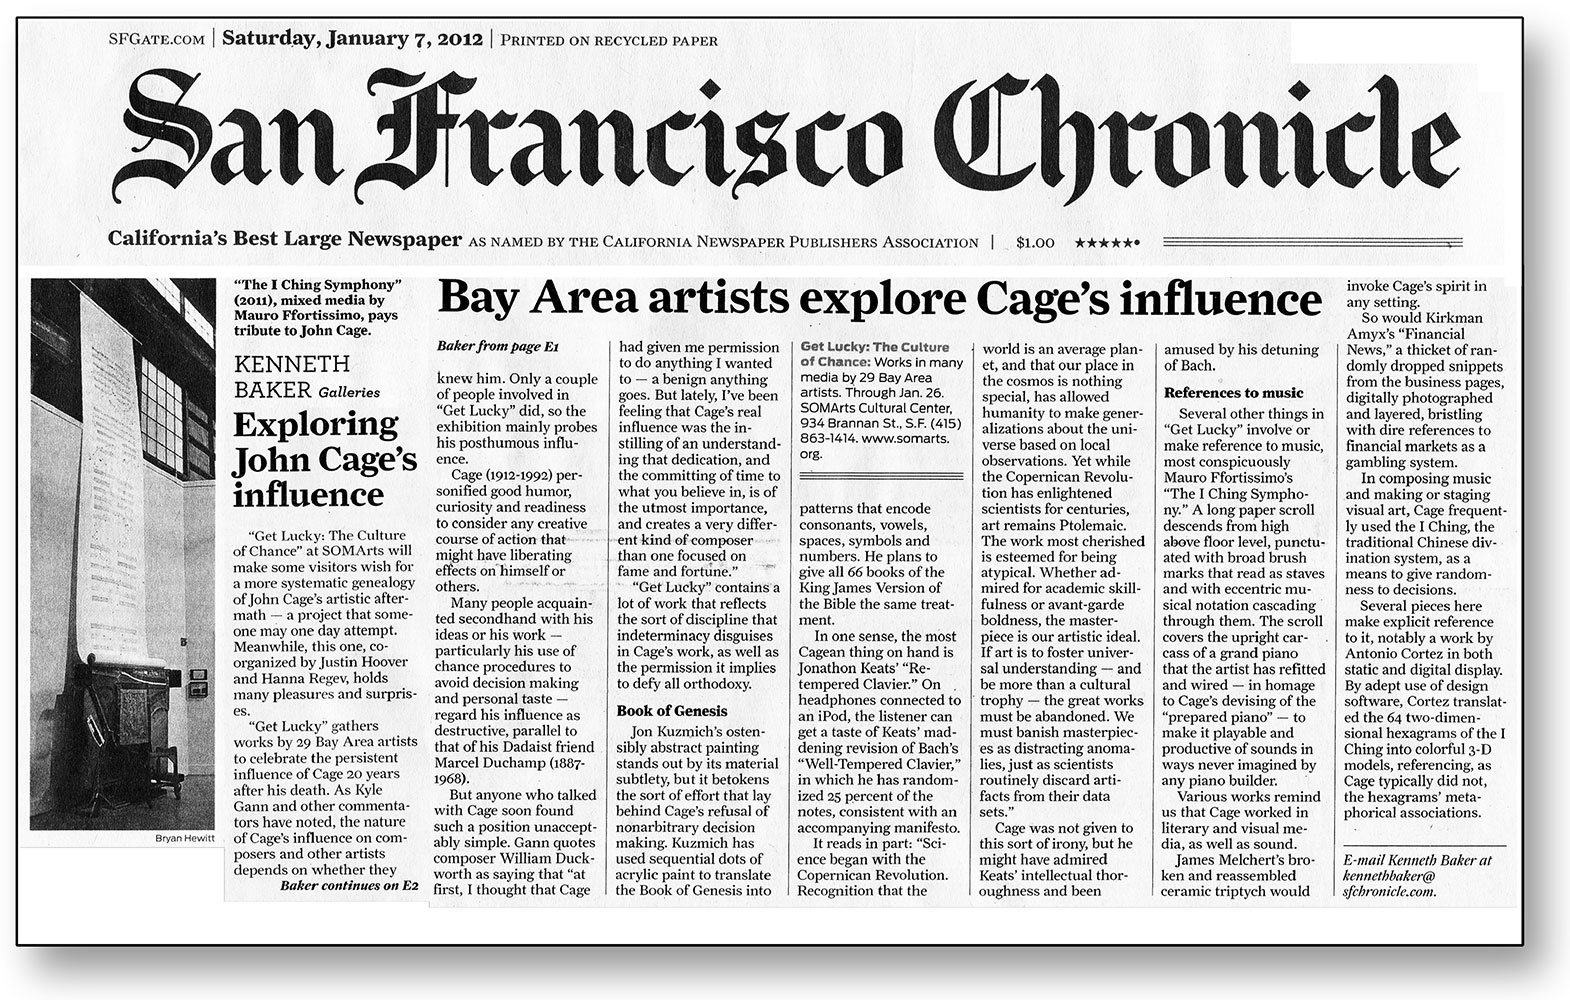 San Francisco Chronicle, January 7, 2012, p. E1